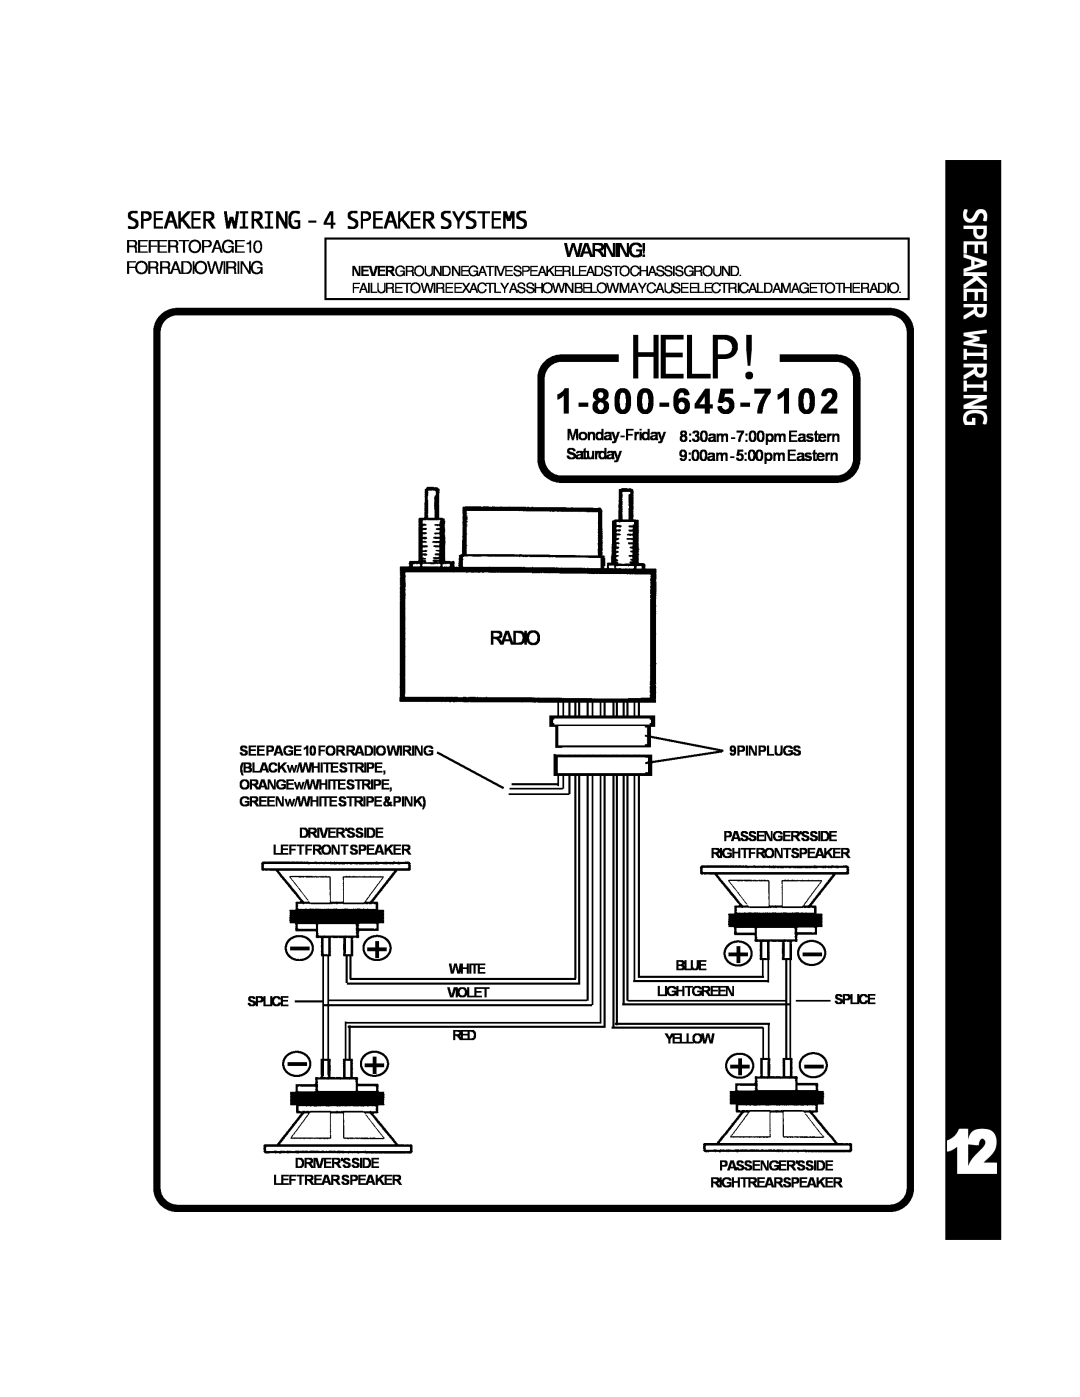 Audiovox 990 manual Speaker Wiring, SPEAKER WIRING-4SPEAKERSYSTEMS, Help, REFERTOPAGE10, Forradiowiring 